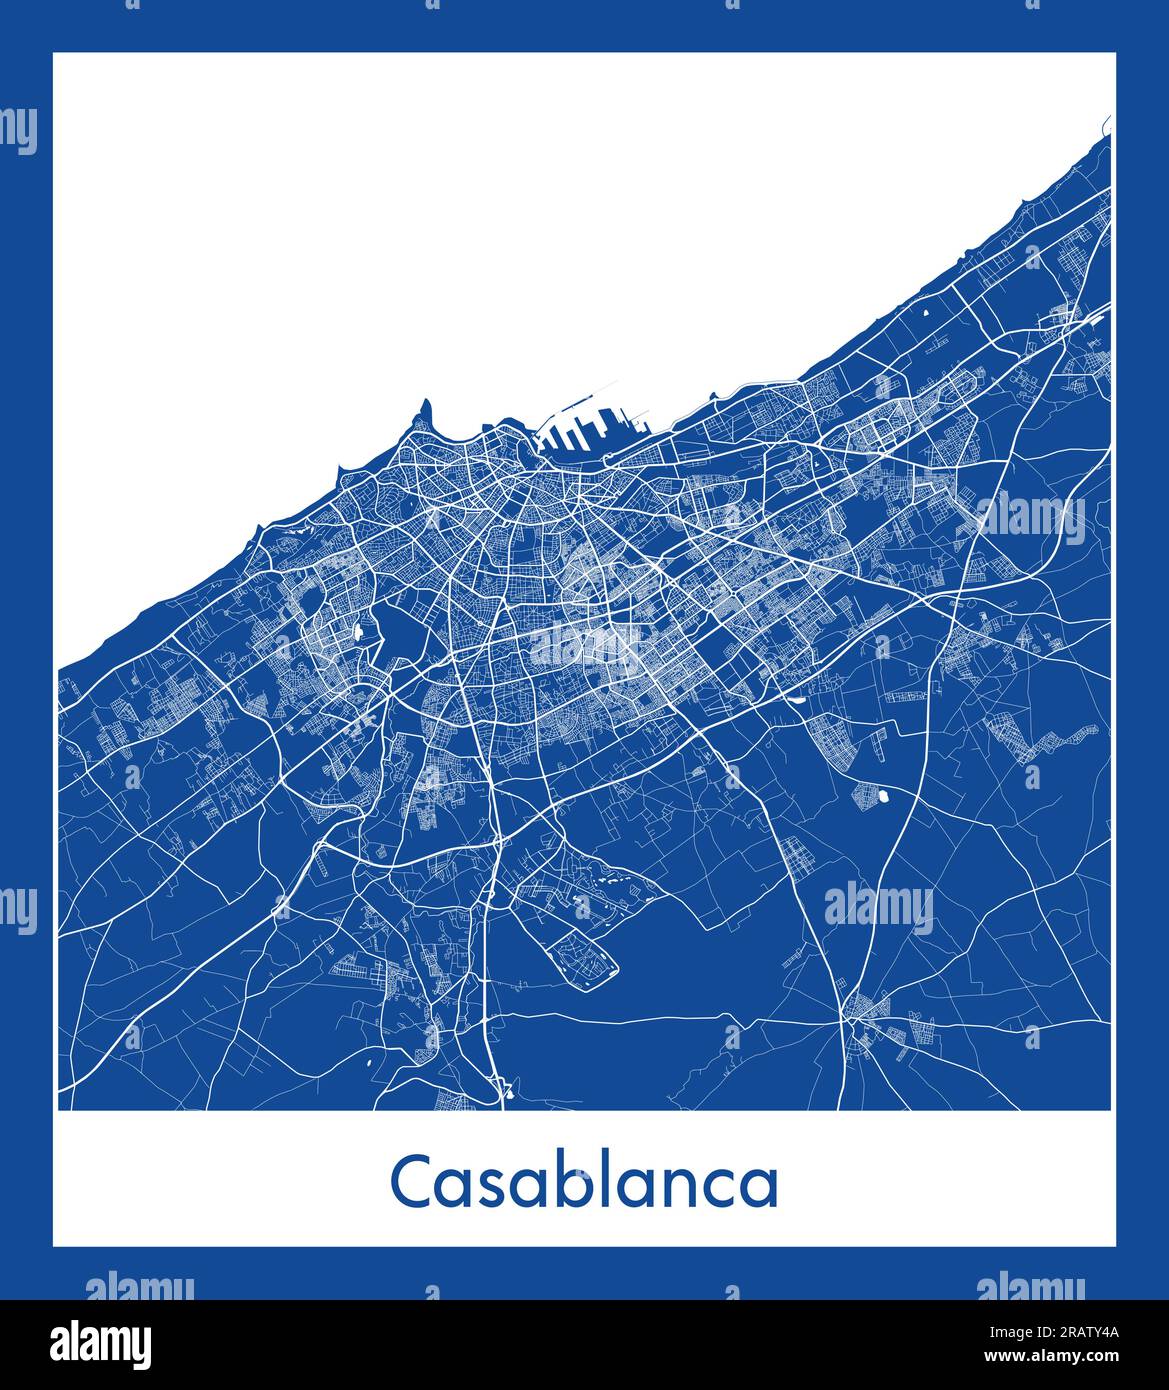 Casablanca Morocco Africa City map blue print vector illustration Stock Vector